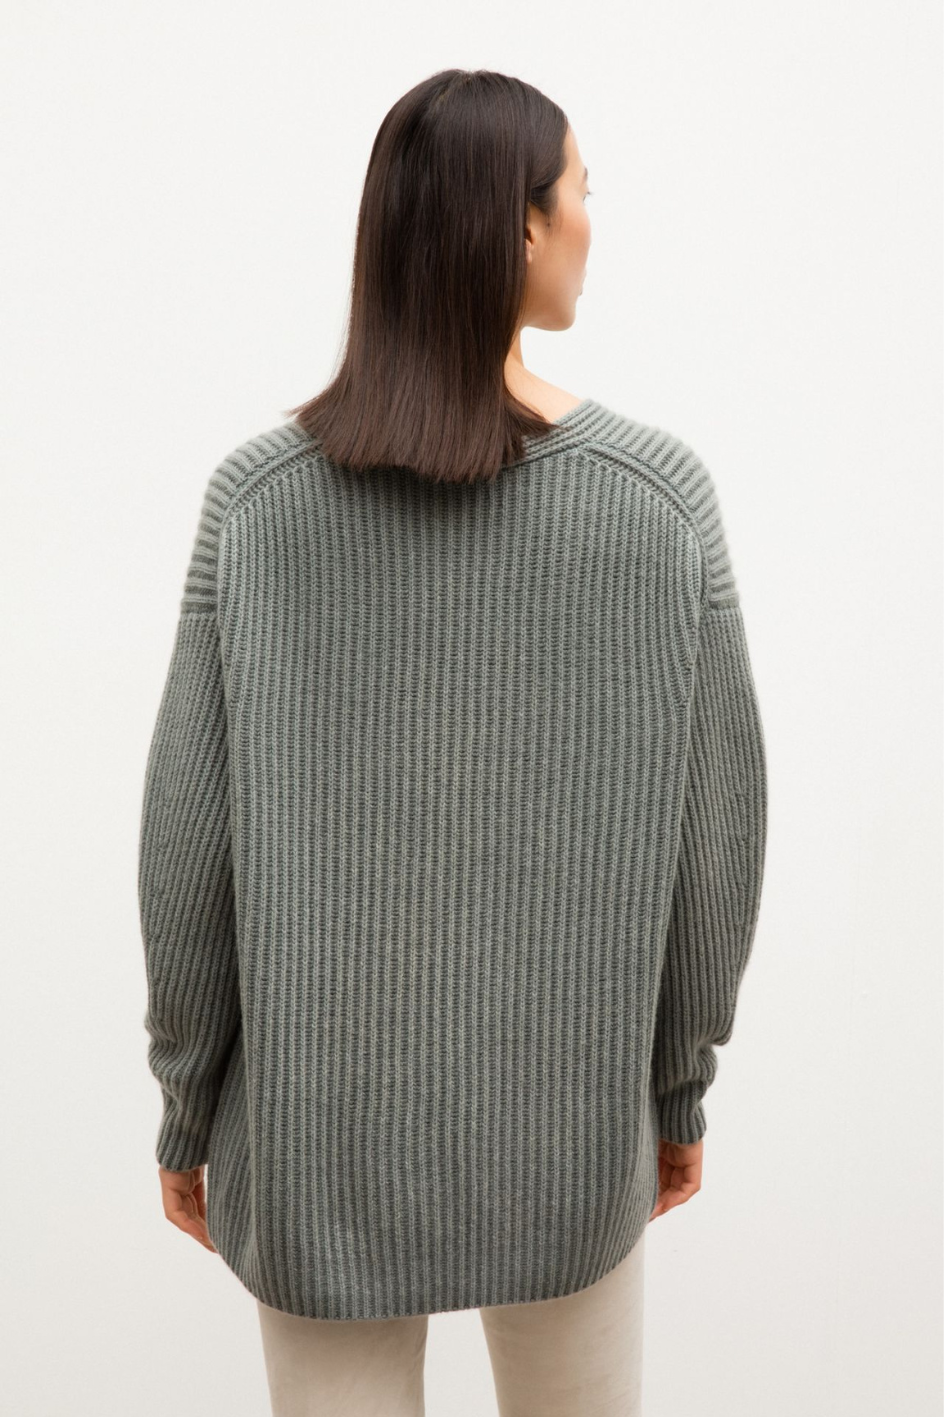 Firella Sweater